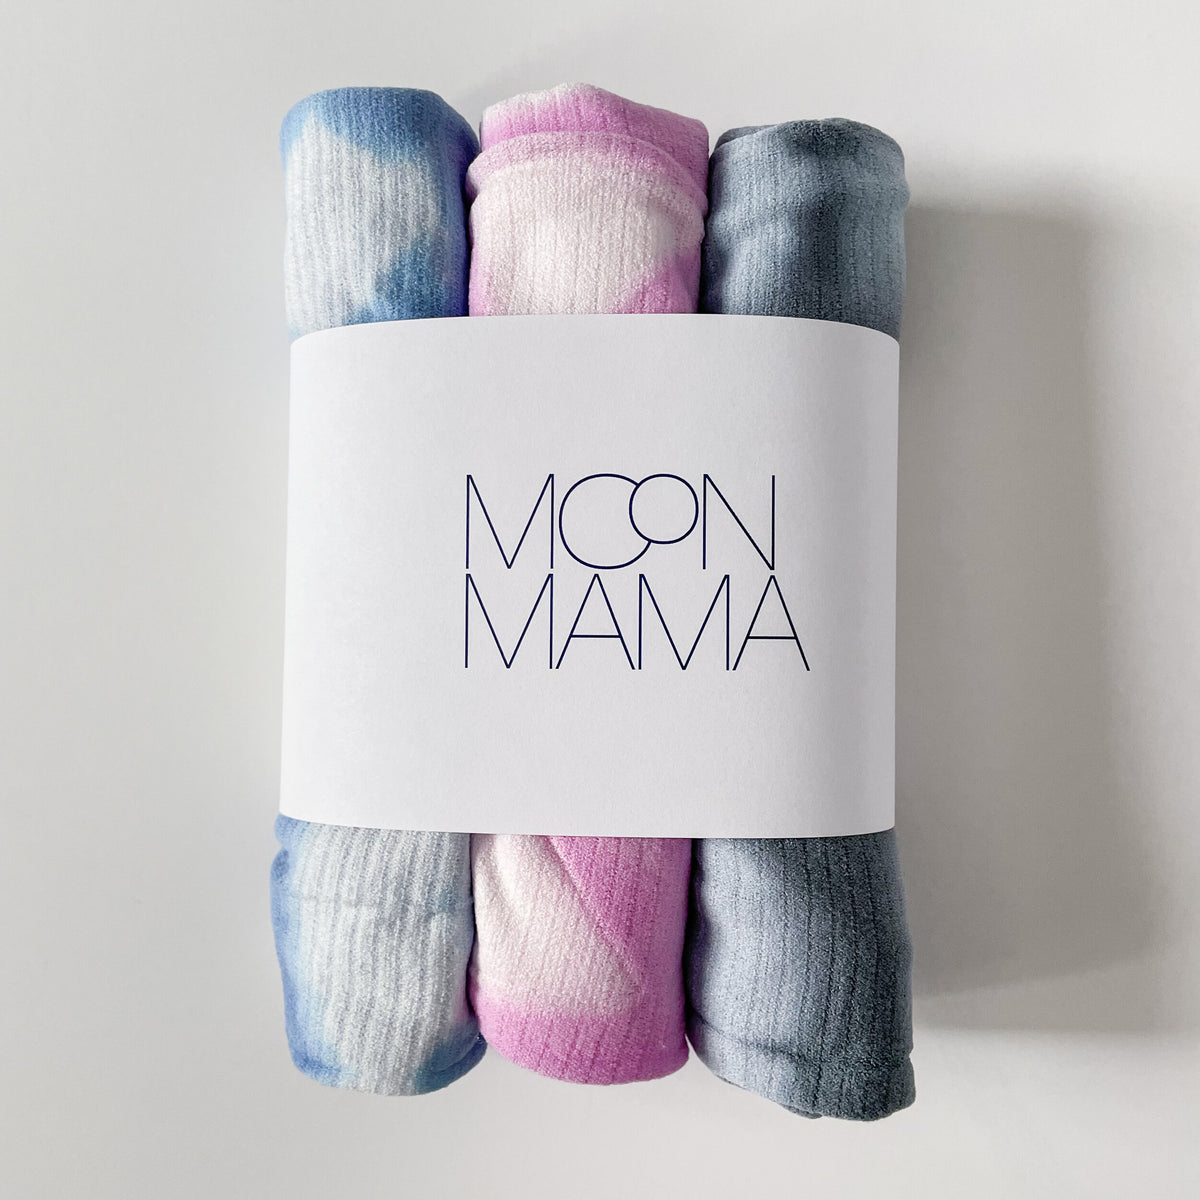 The Single in Cloud Blue, Postpartum Mesh Underwear – Hey Moon Mama